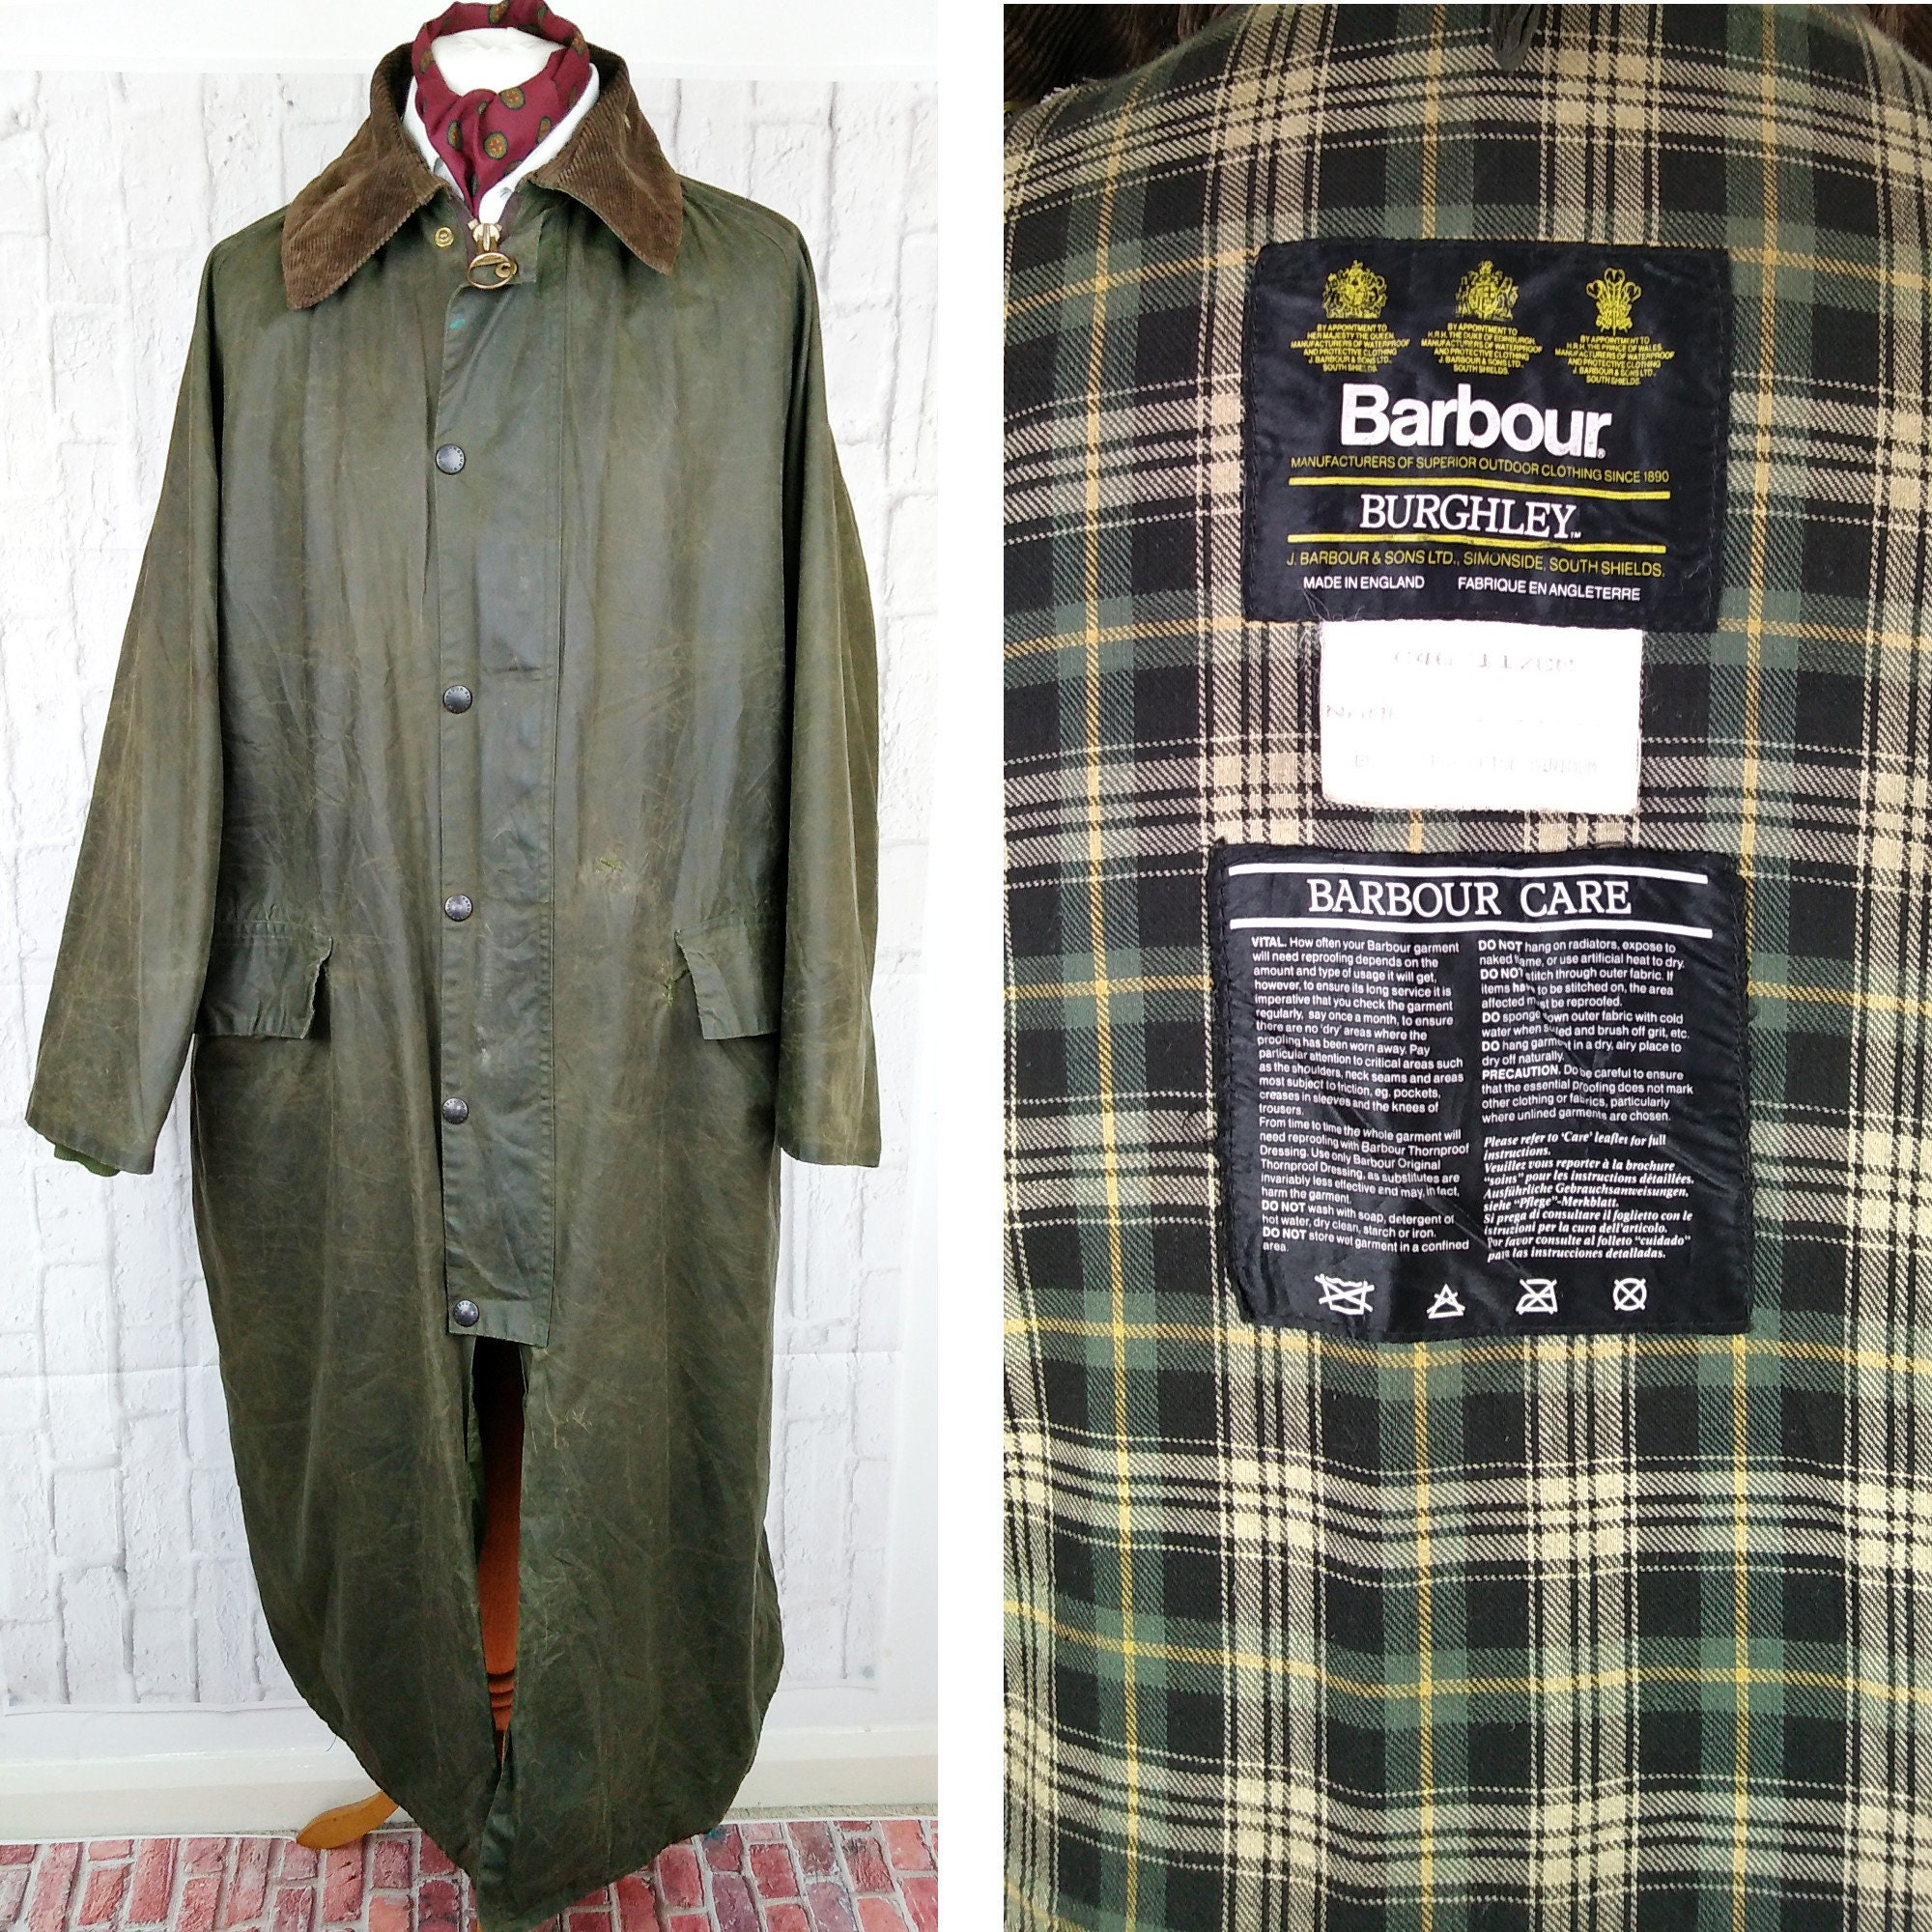 Barbour Burghley Wax Coat A160 Green Vintage - Size C46/117cm Chest 46